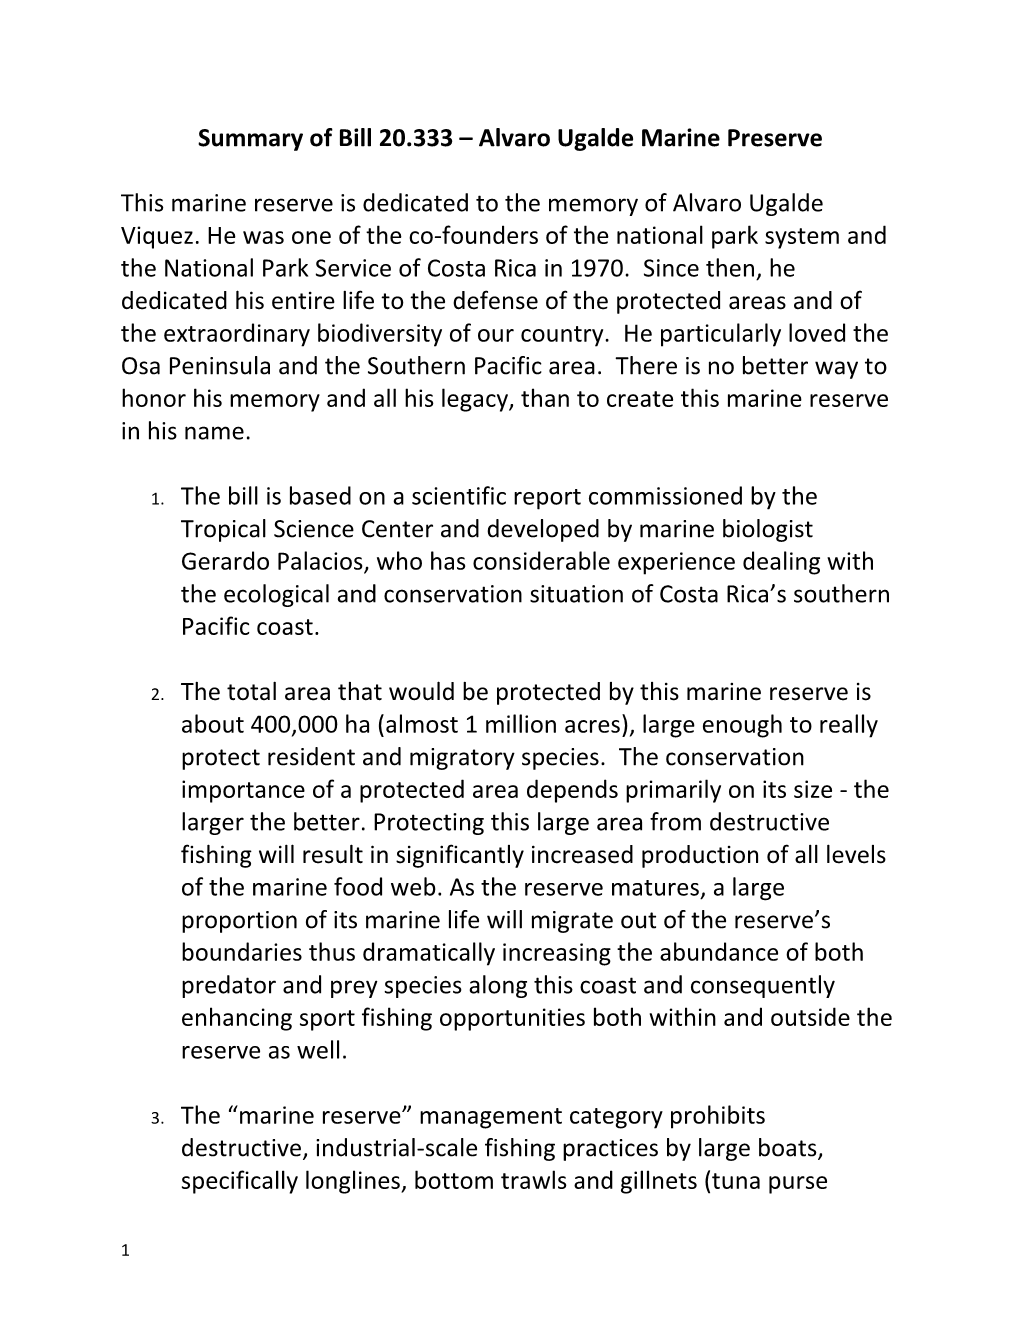 Summary of Bill 20.333 Alvaro Ugalde Marine Preserve